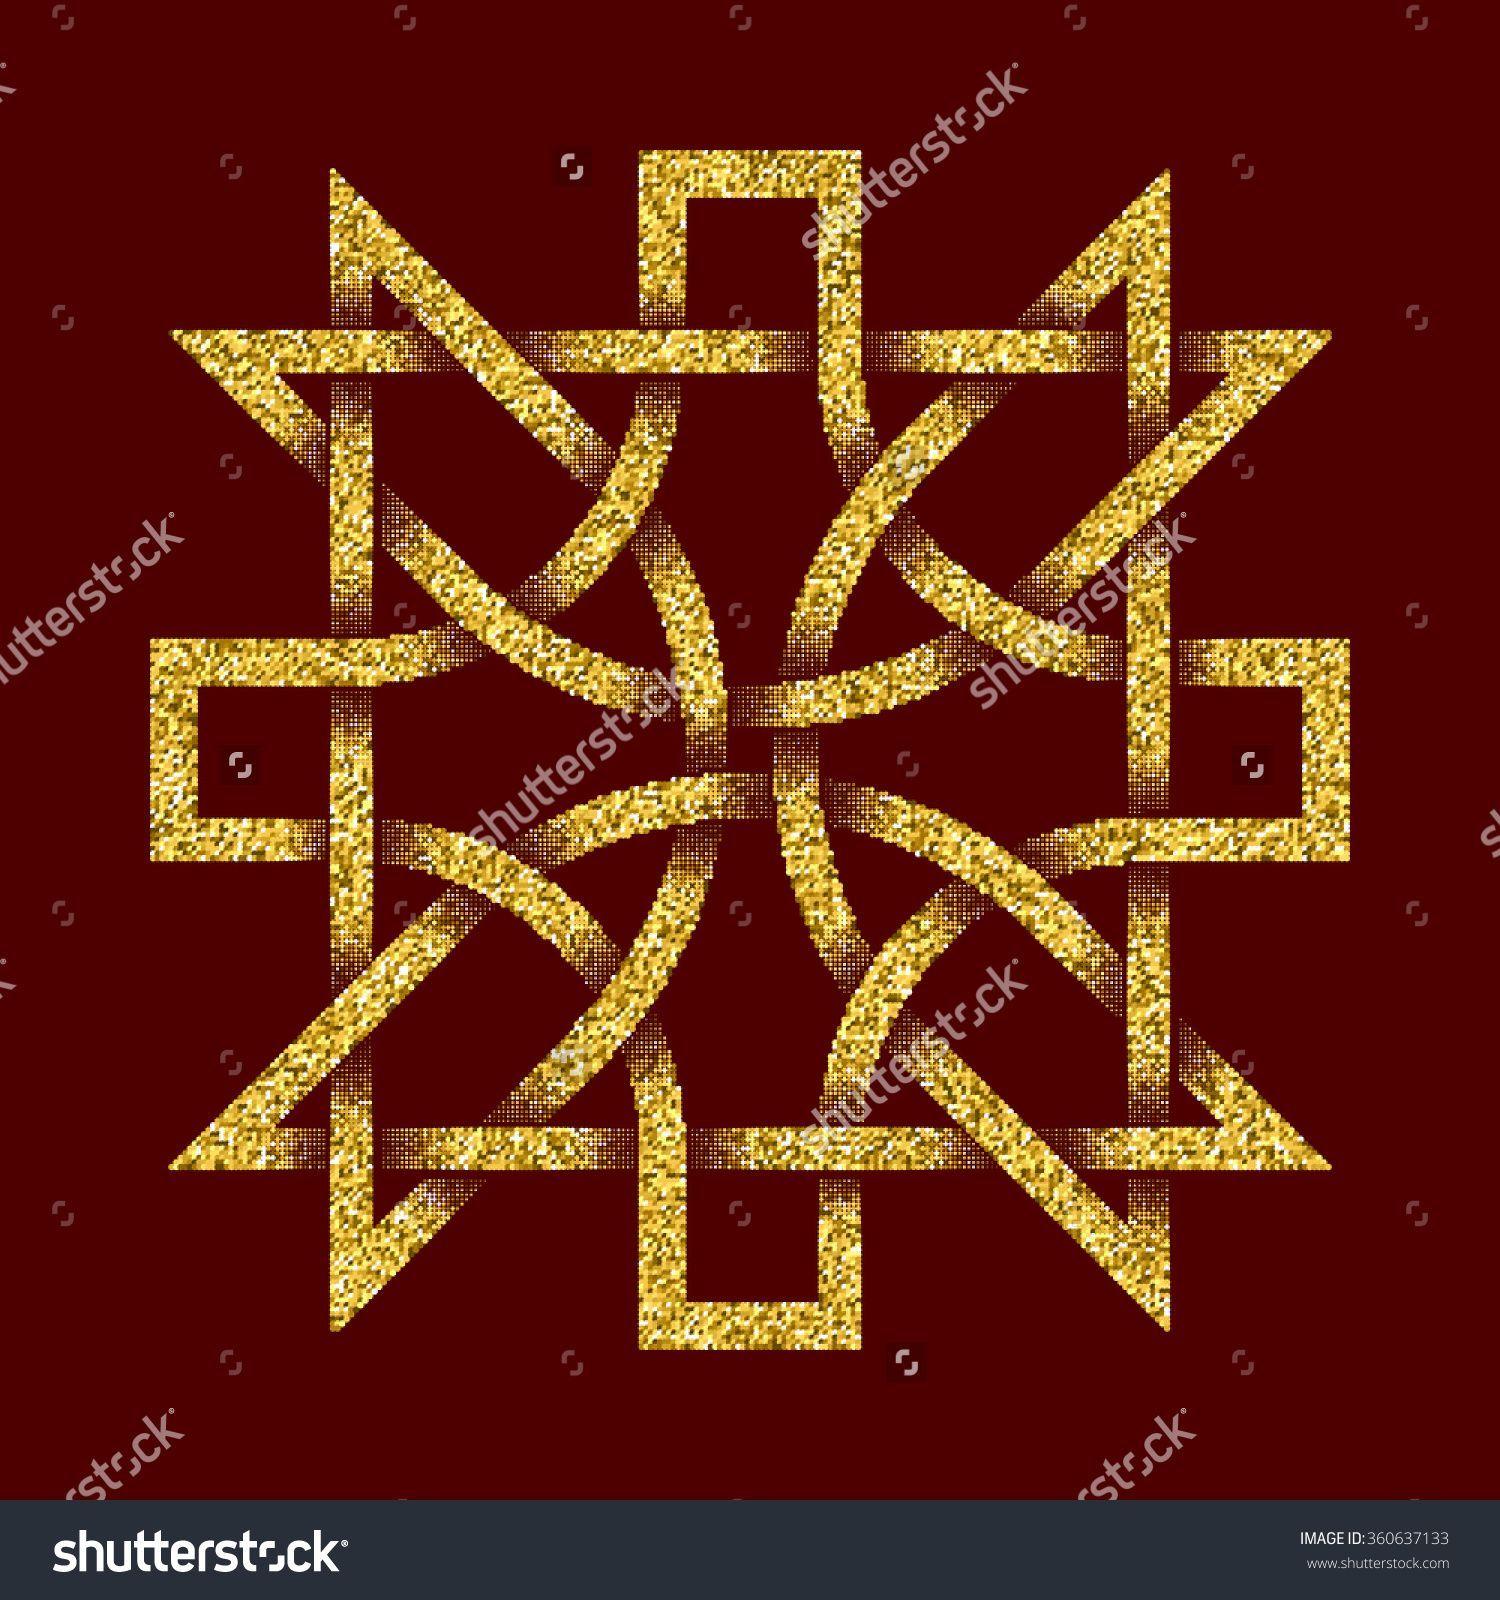 Red Celtic Logo - Golden glittering #logo template in #Celtic knots style on dark red